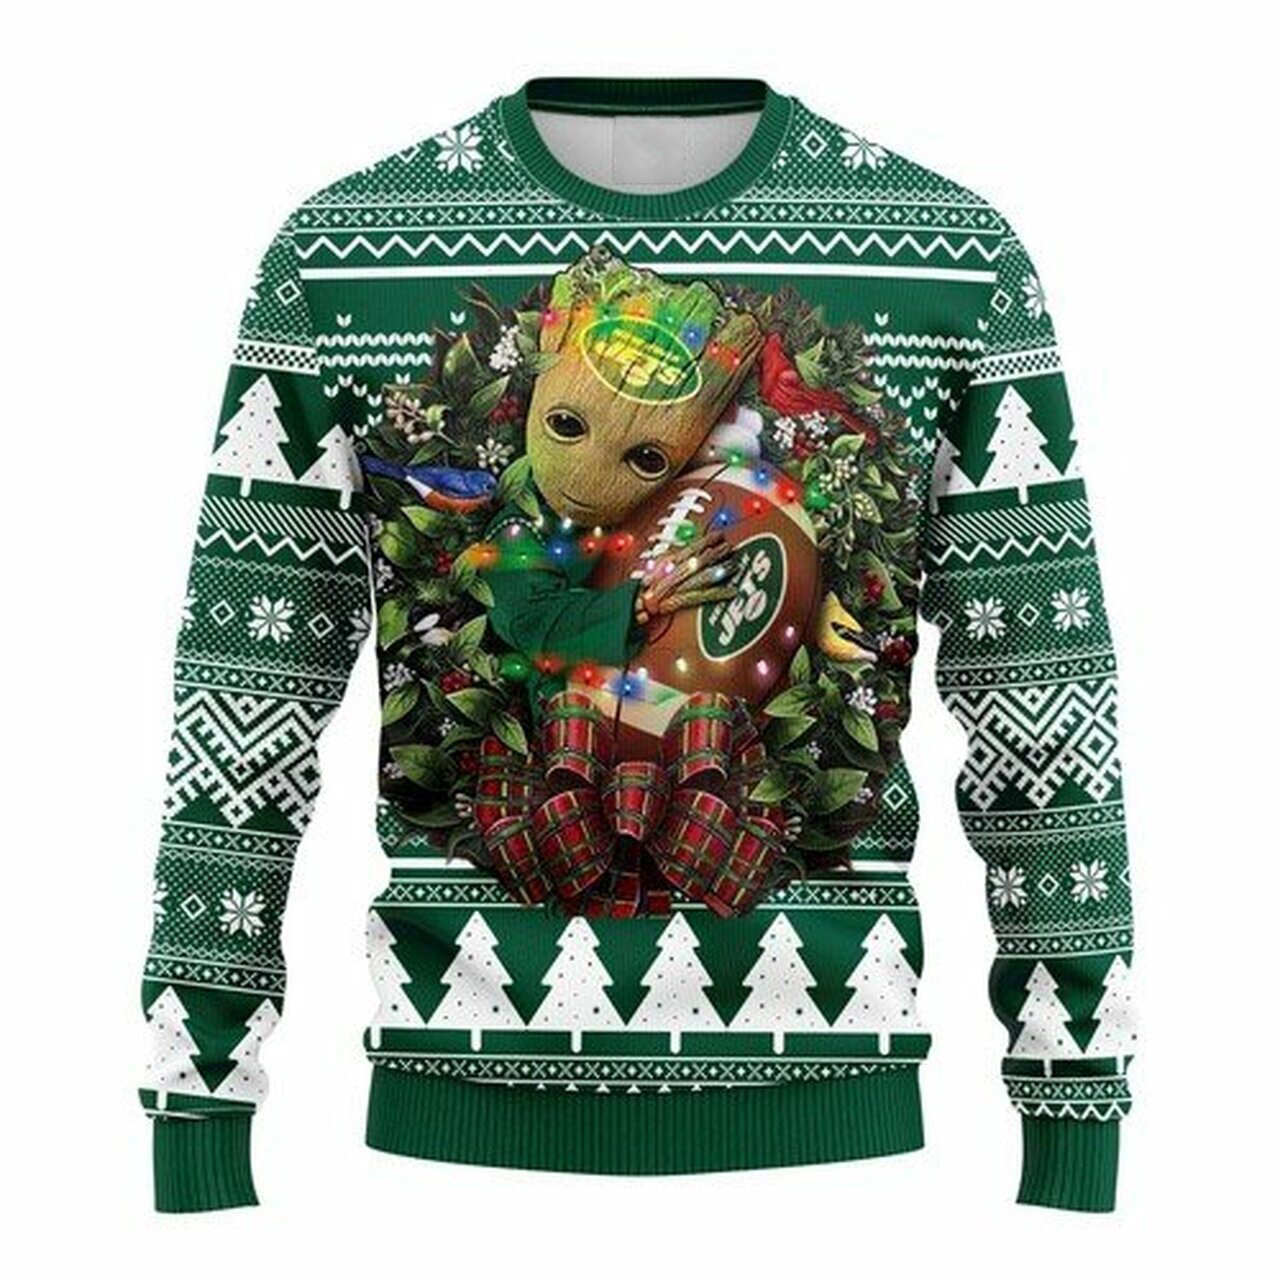 NFL New York Jets Groot hug ugly christmas sweater